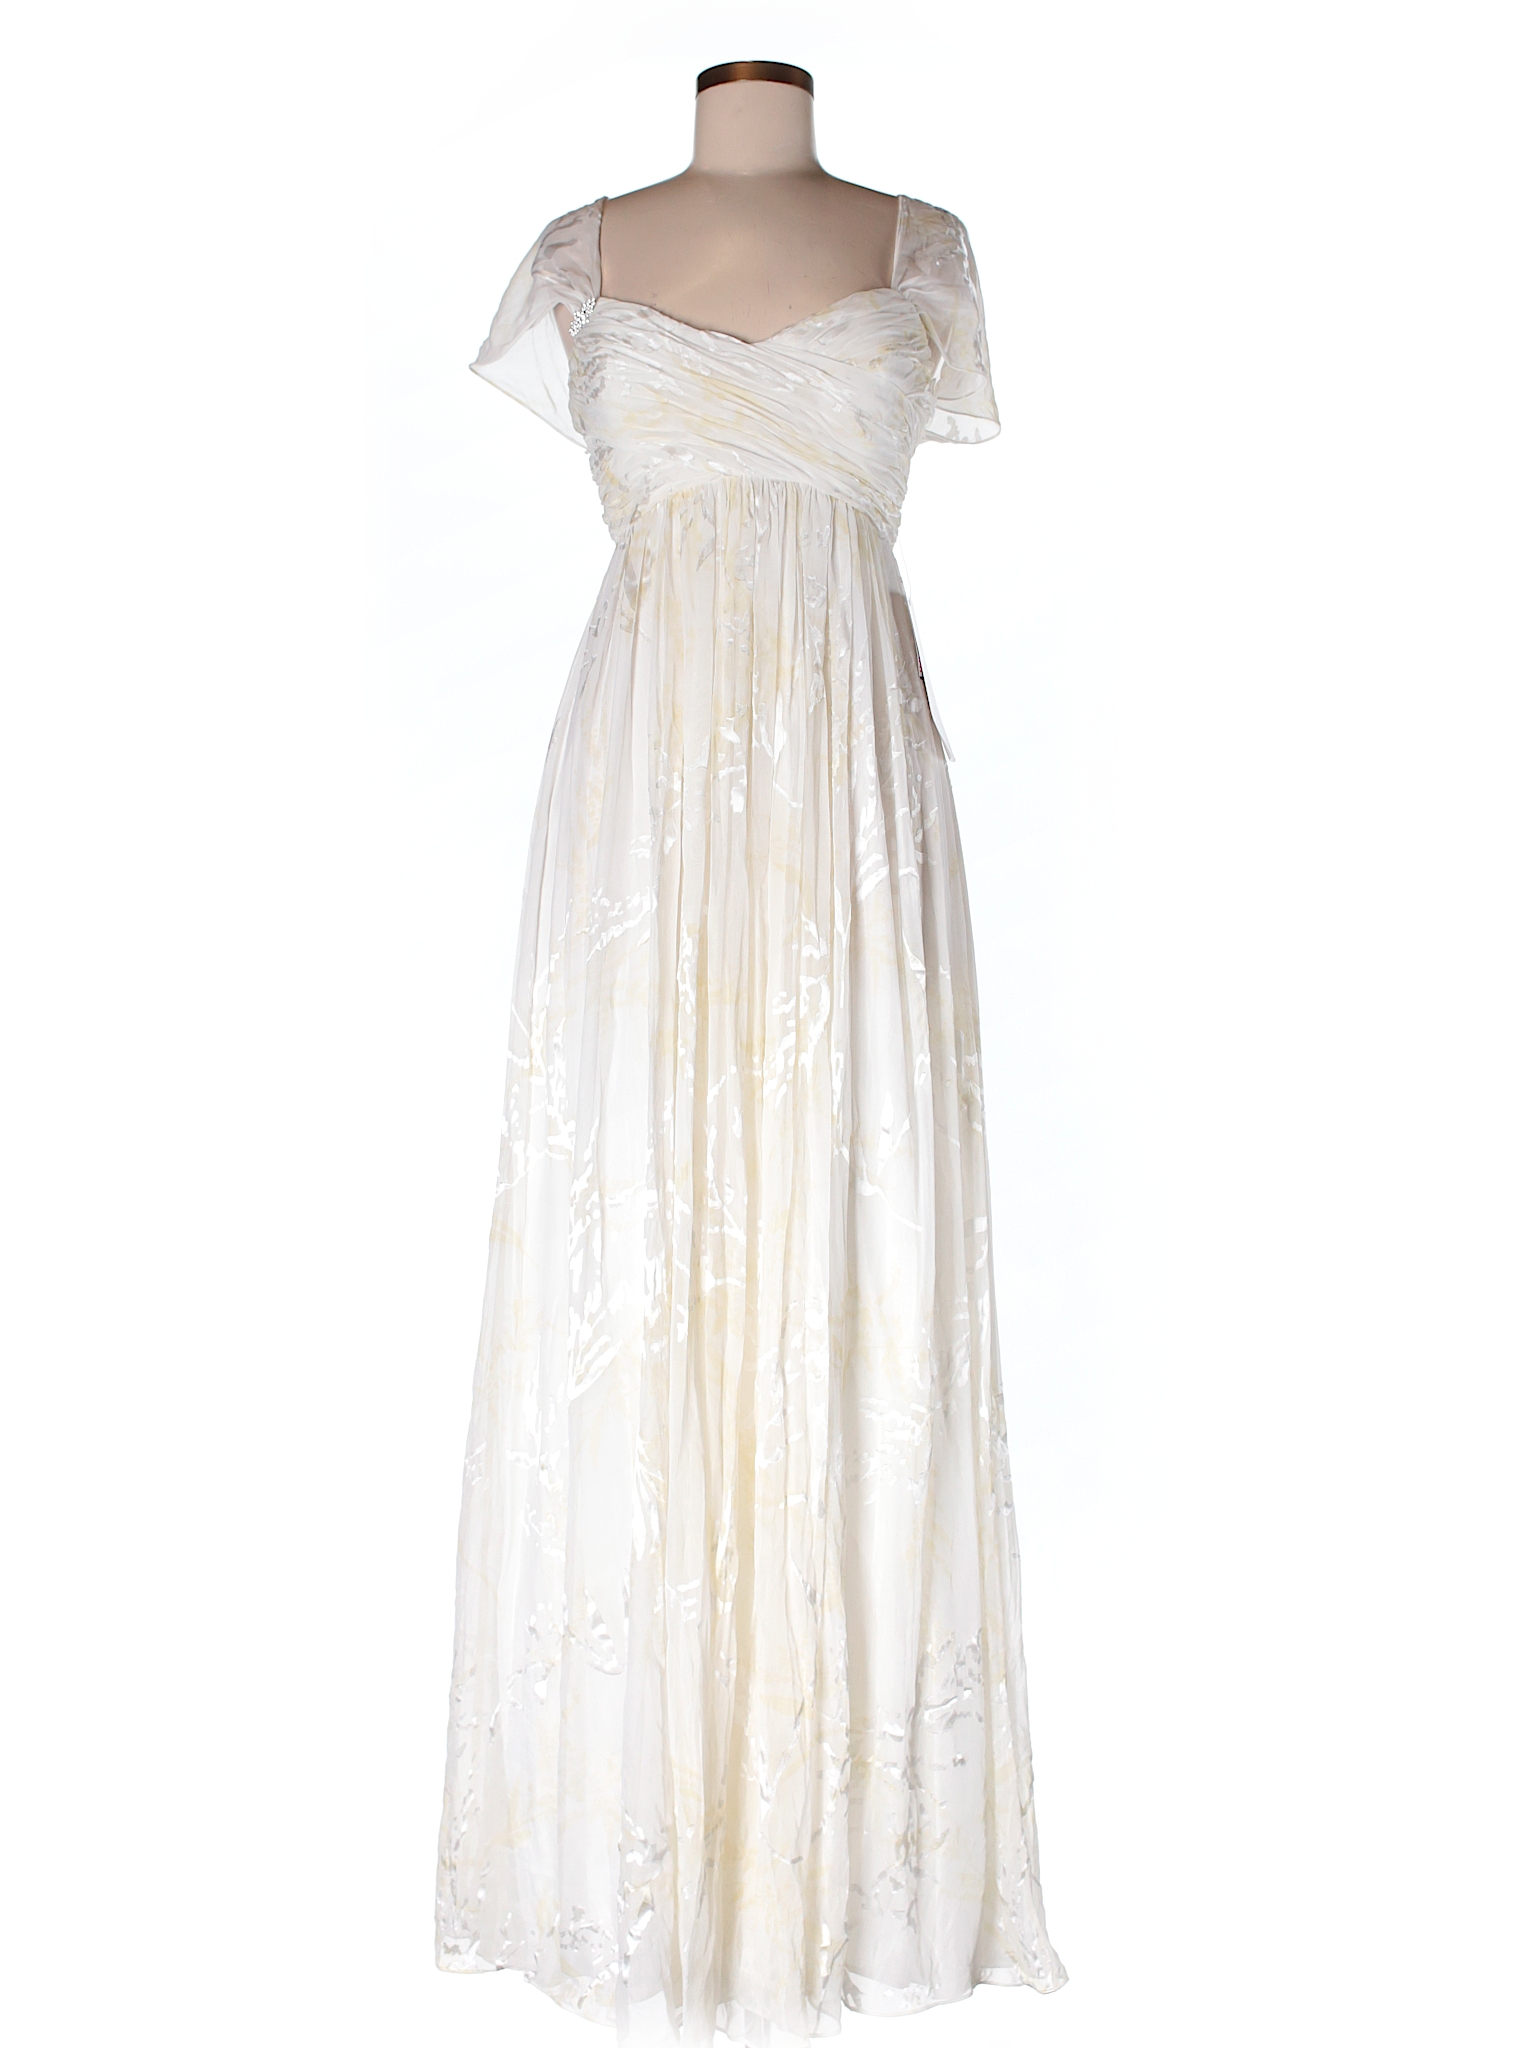 David's Bridal Metallic Beige Cocktail Dress Size 6 - 69% off | thredUP